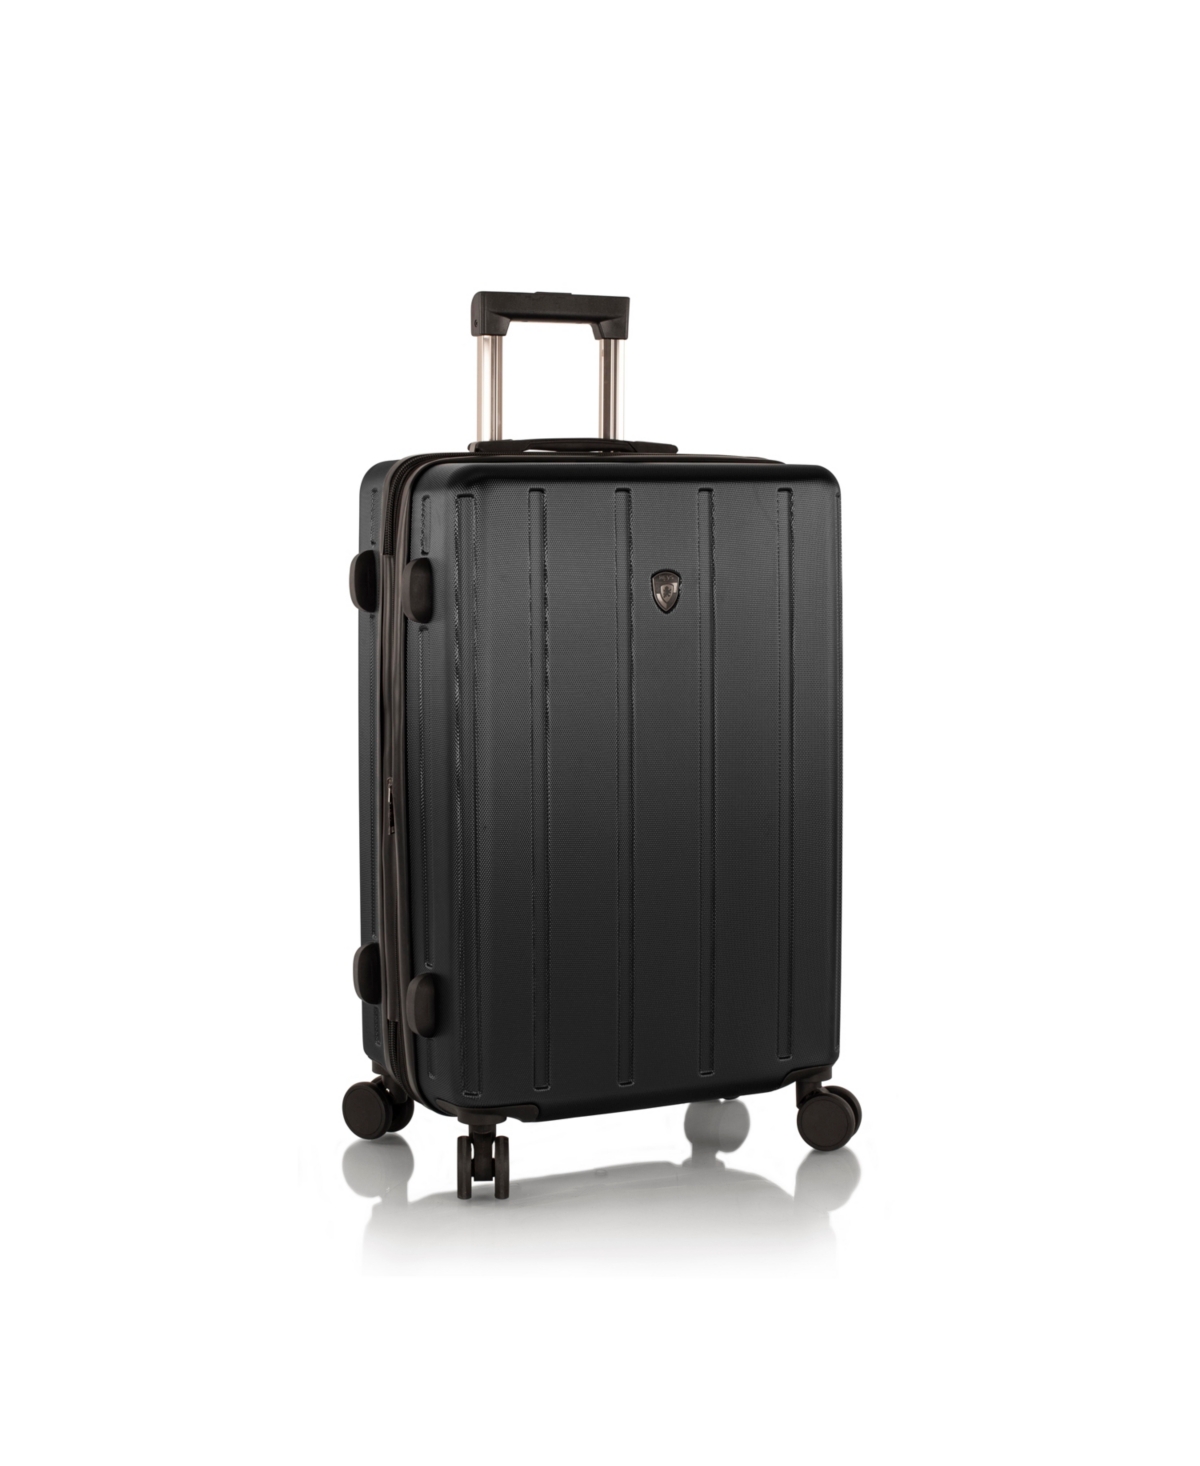 Heys Spinlite 21" Hardside Carry-on Spinner Luggage In Black